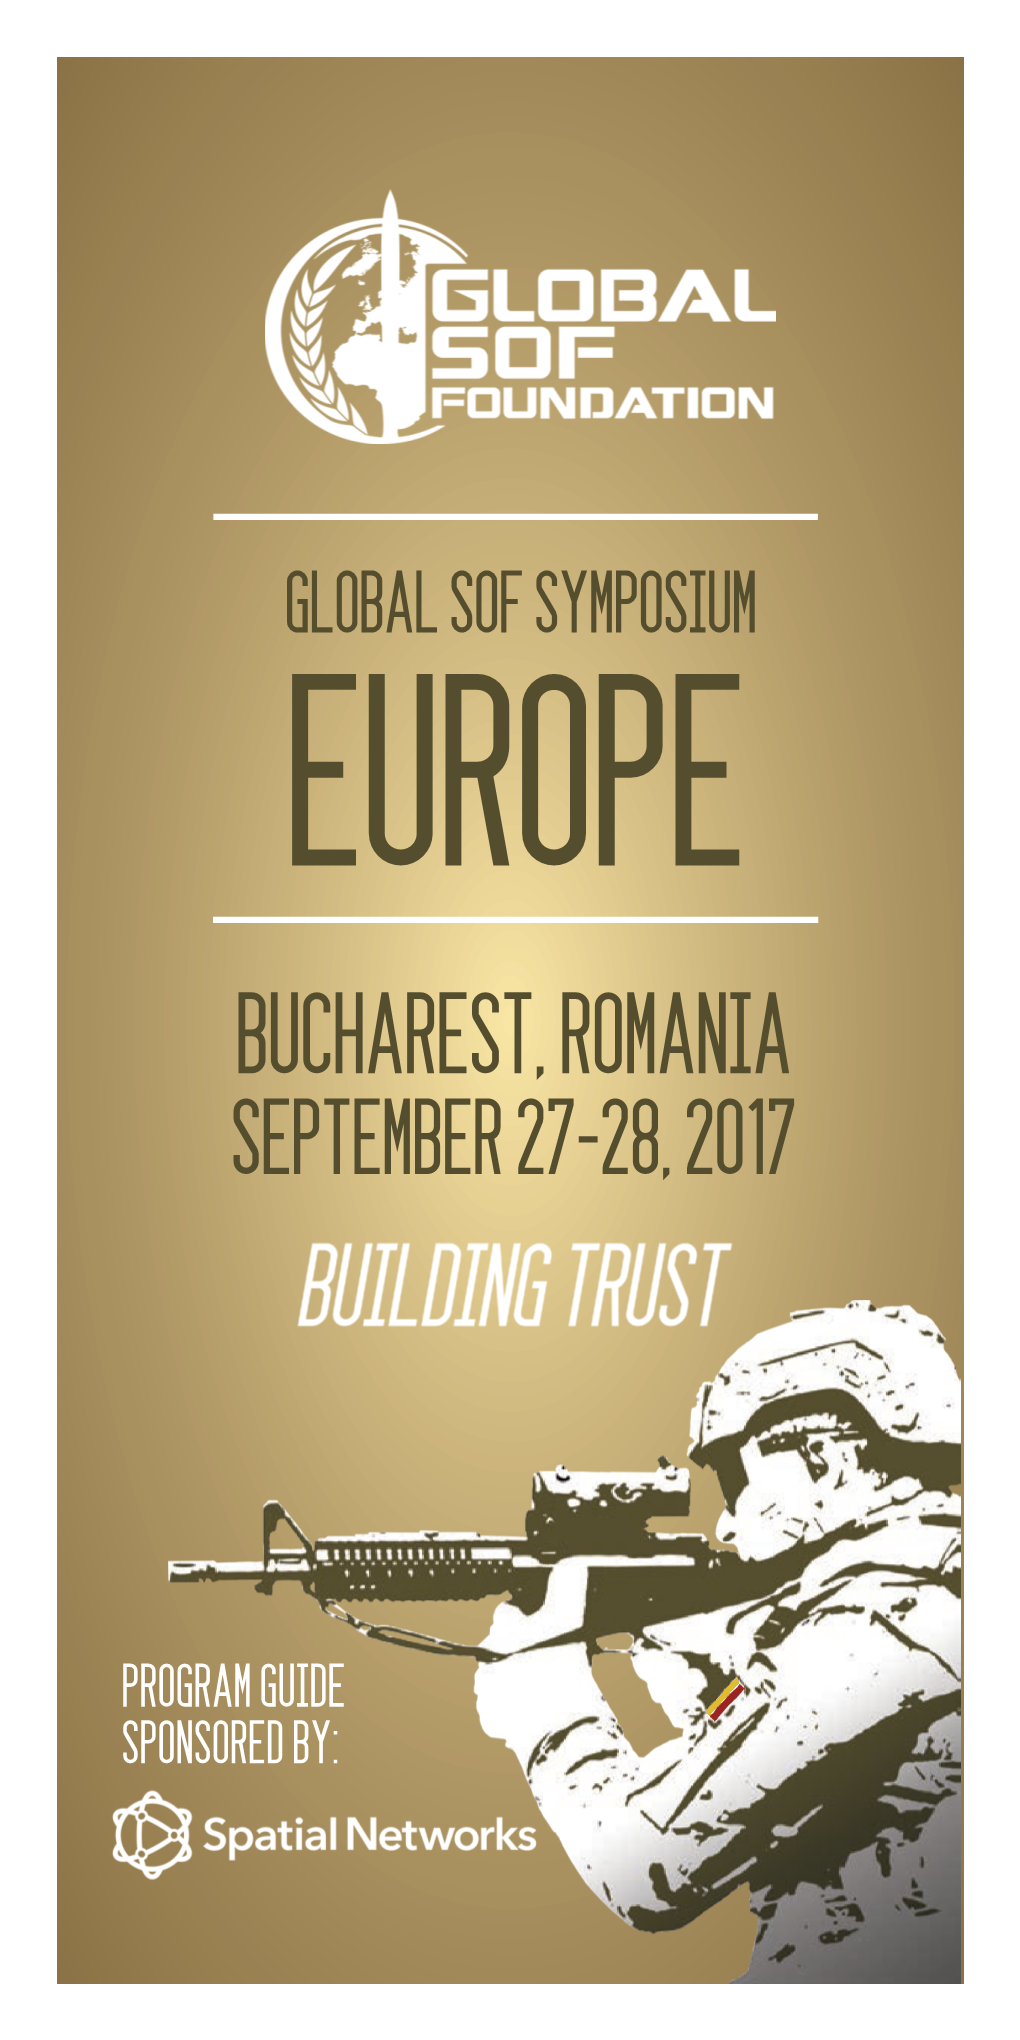 Bucharest, Romania September 27-28, 2017